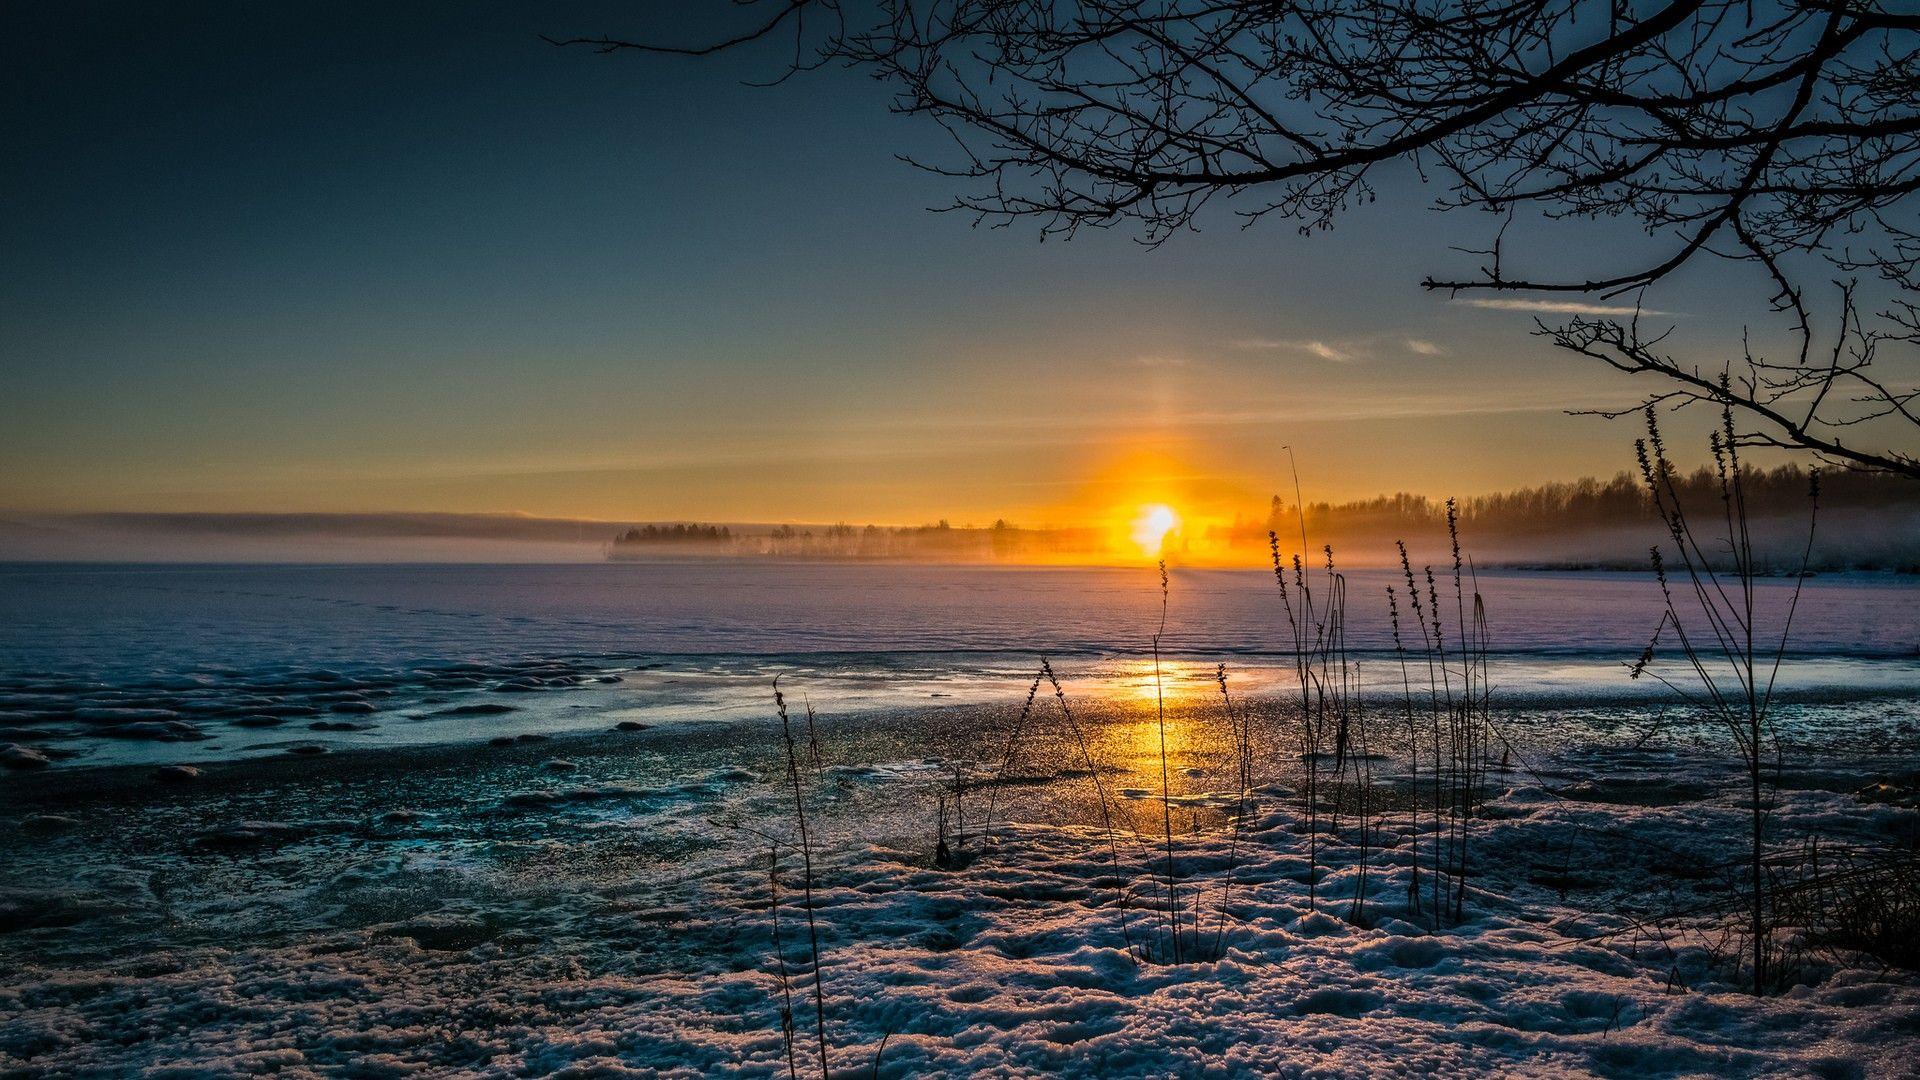 Illuminated Tag wallpaper: Magnificent Winter Sunset Lake Oslo